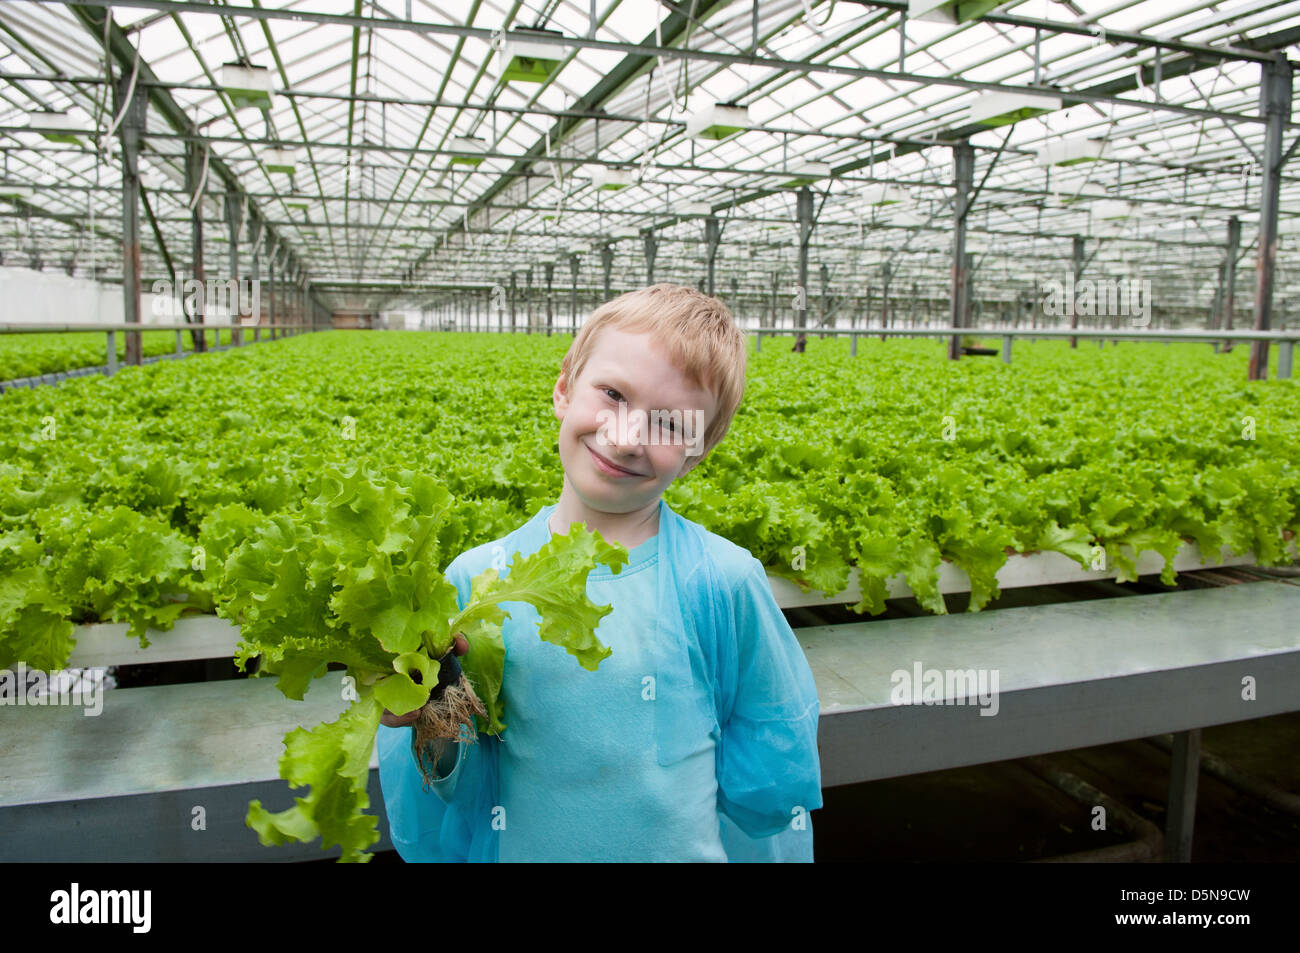 Smiling boy holding lettuce in greenhouse Banque D'Images